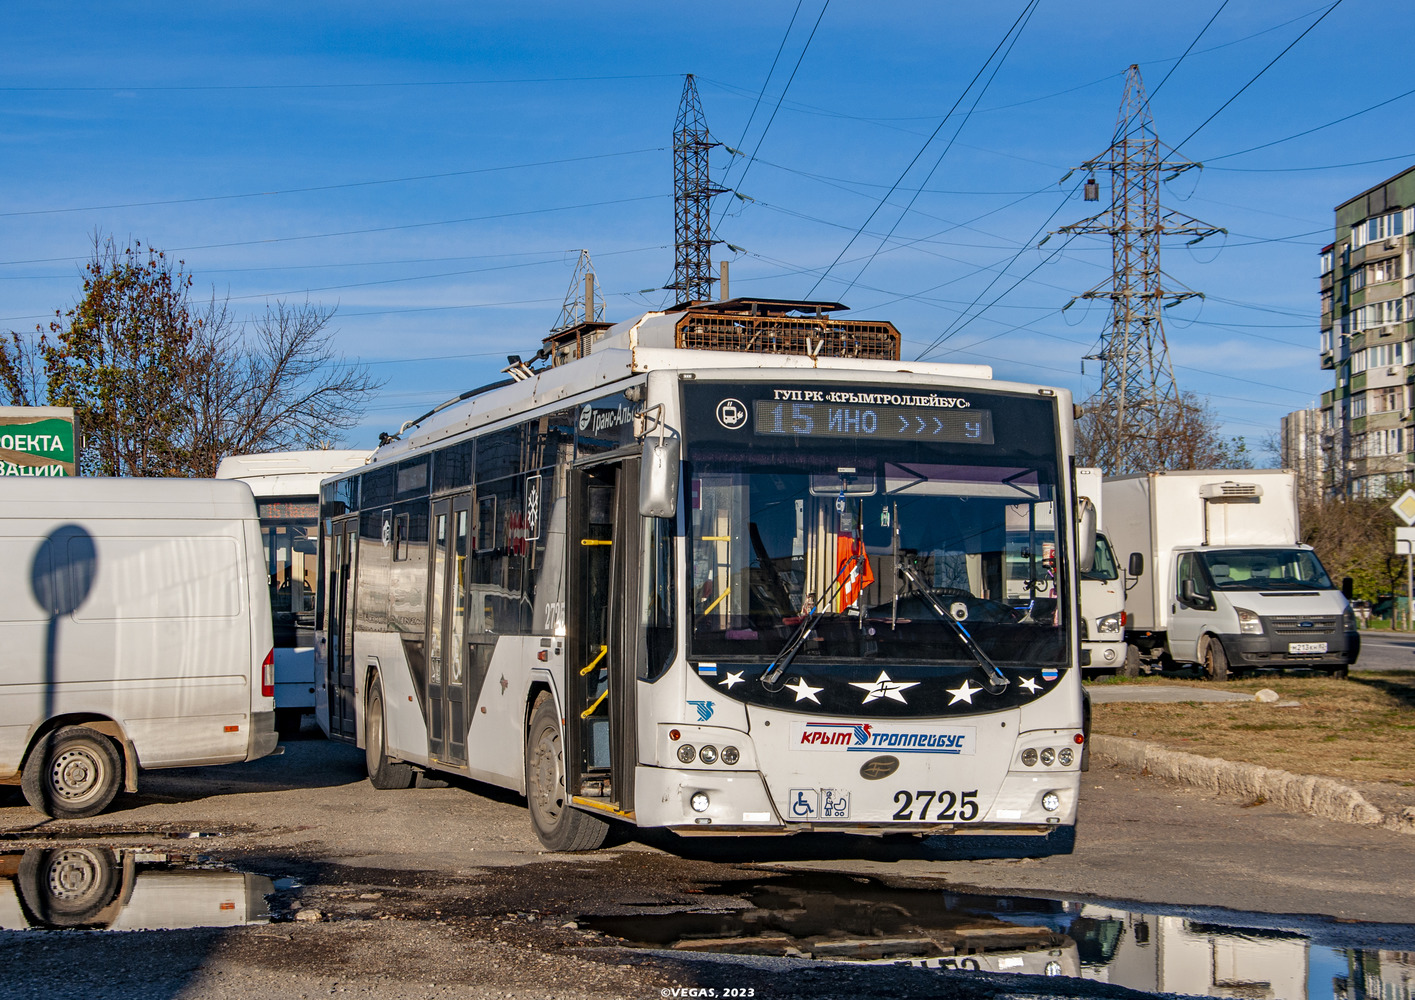 Krimski trolejbus, VMZ-5298.01 “Avangard” č. 2725; Krimski trolejbus — The movement of trolleybuses without CS (autonomous running).